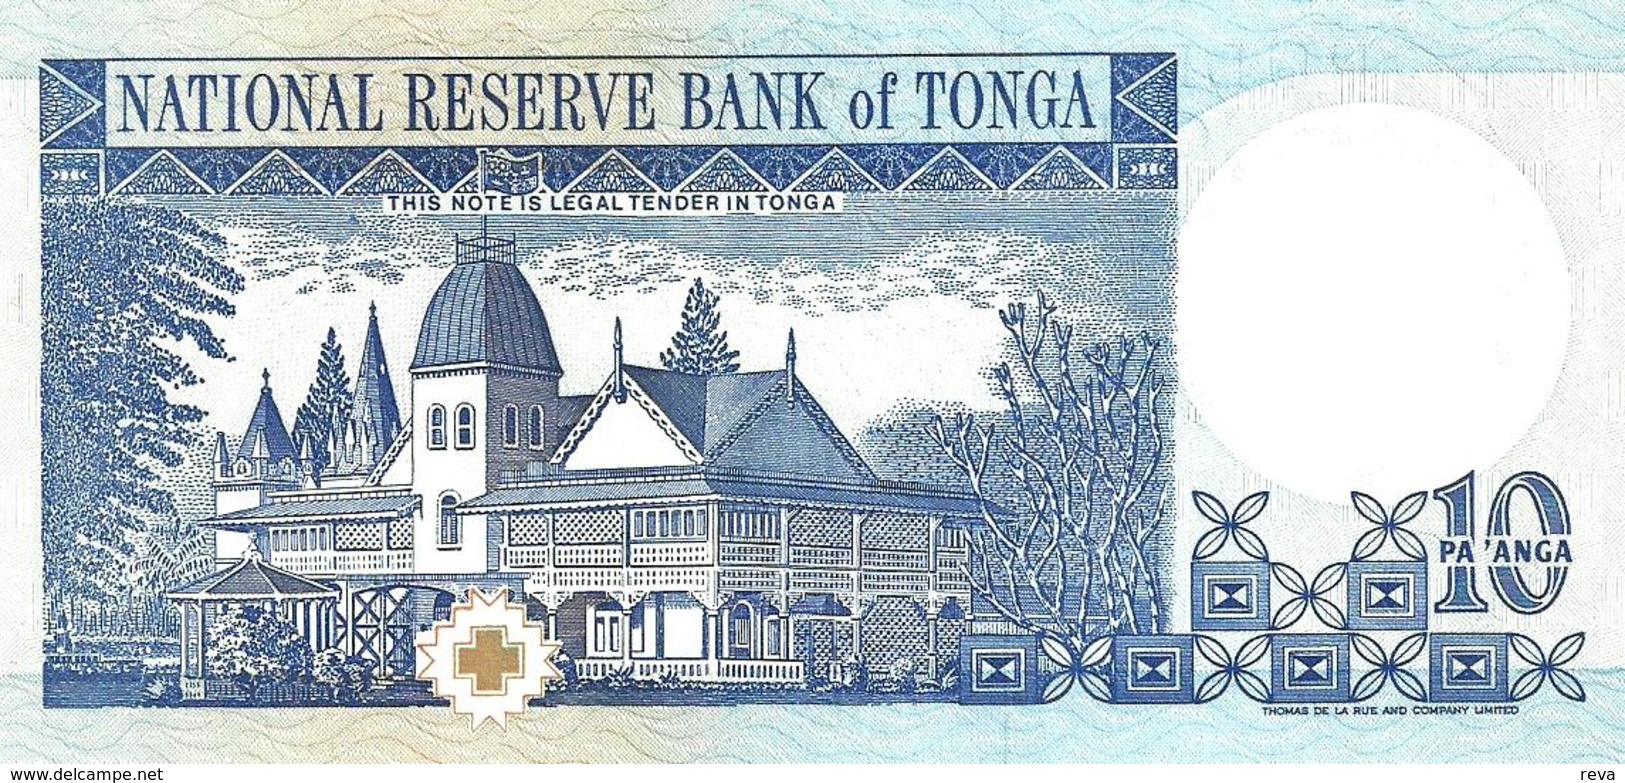 TONGA 10 PA'ANGA  BLUE PORTRAIT FRONT BUILDING BACK  ND(1995) P34a UNC READ DESCRIPTION - Tonga